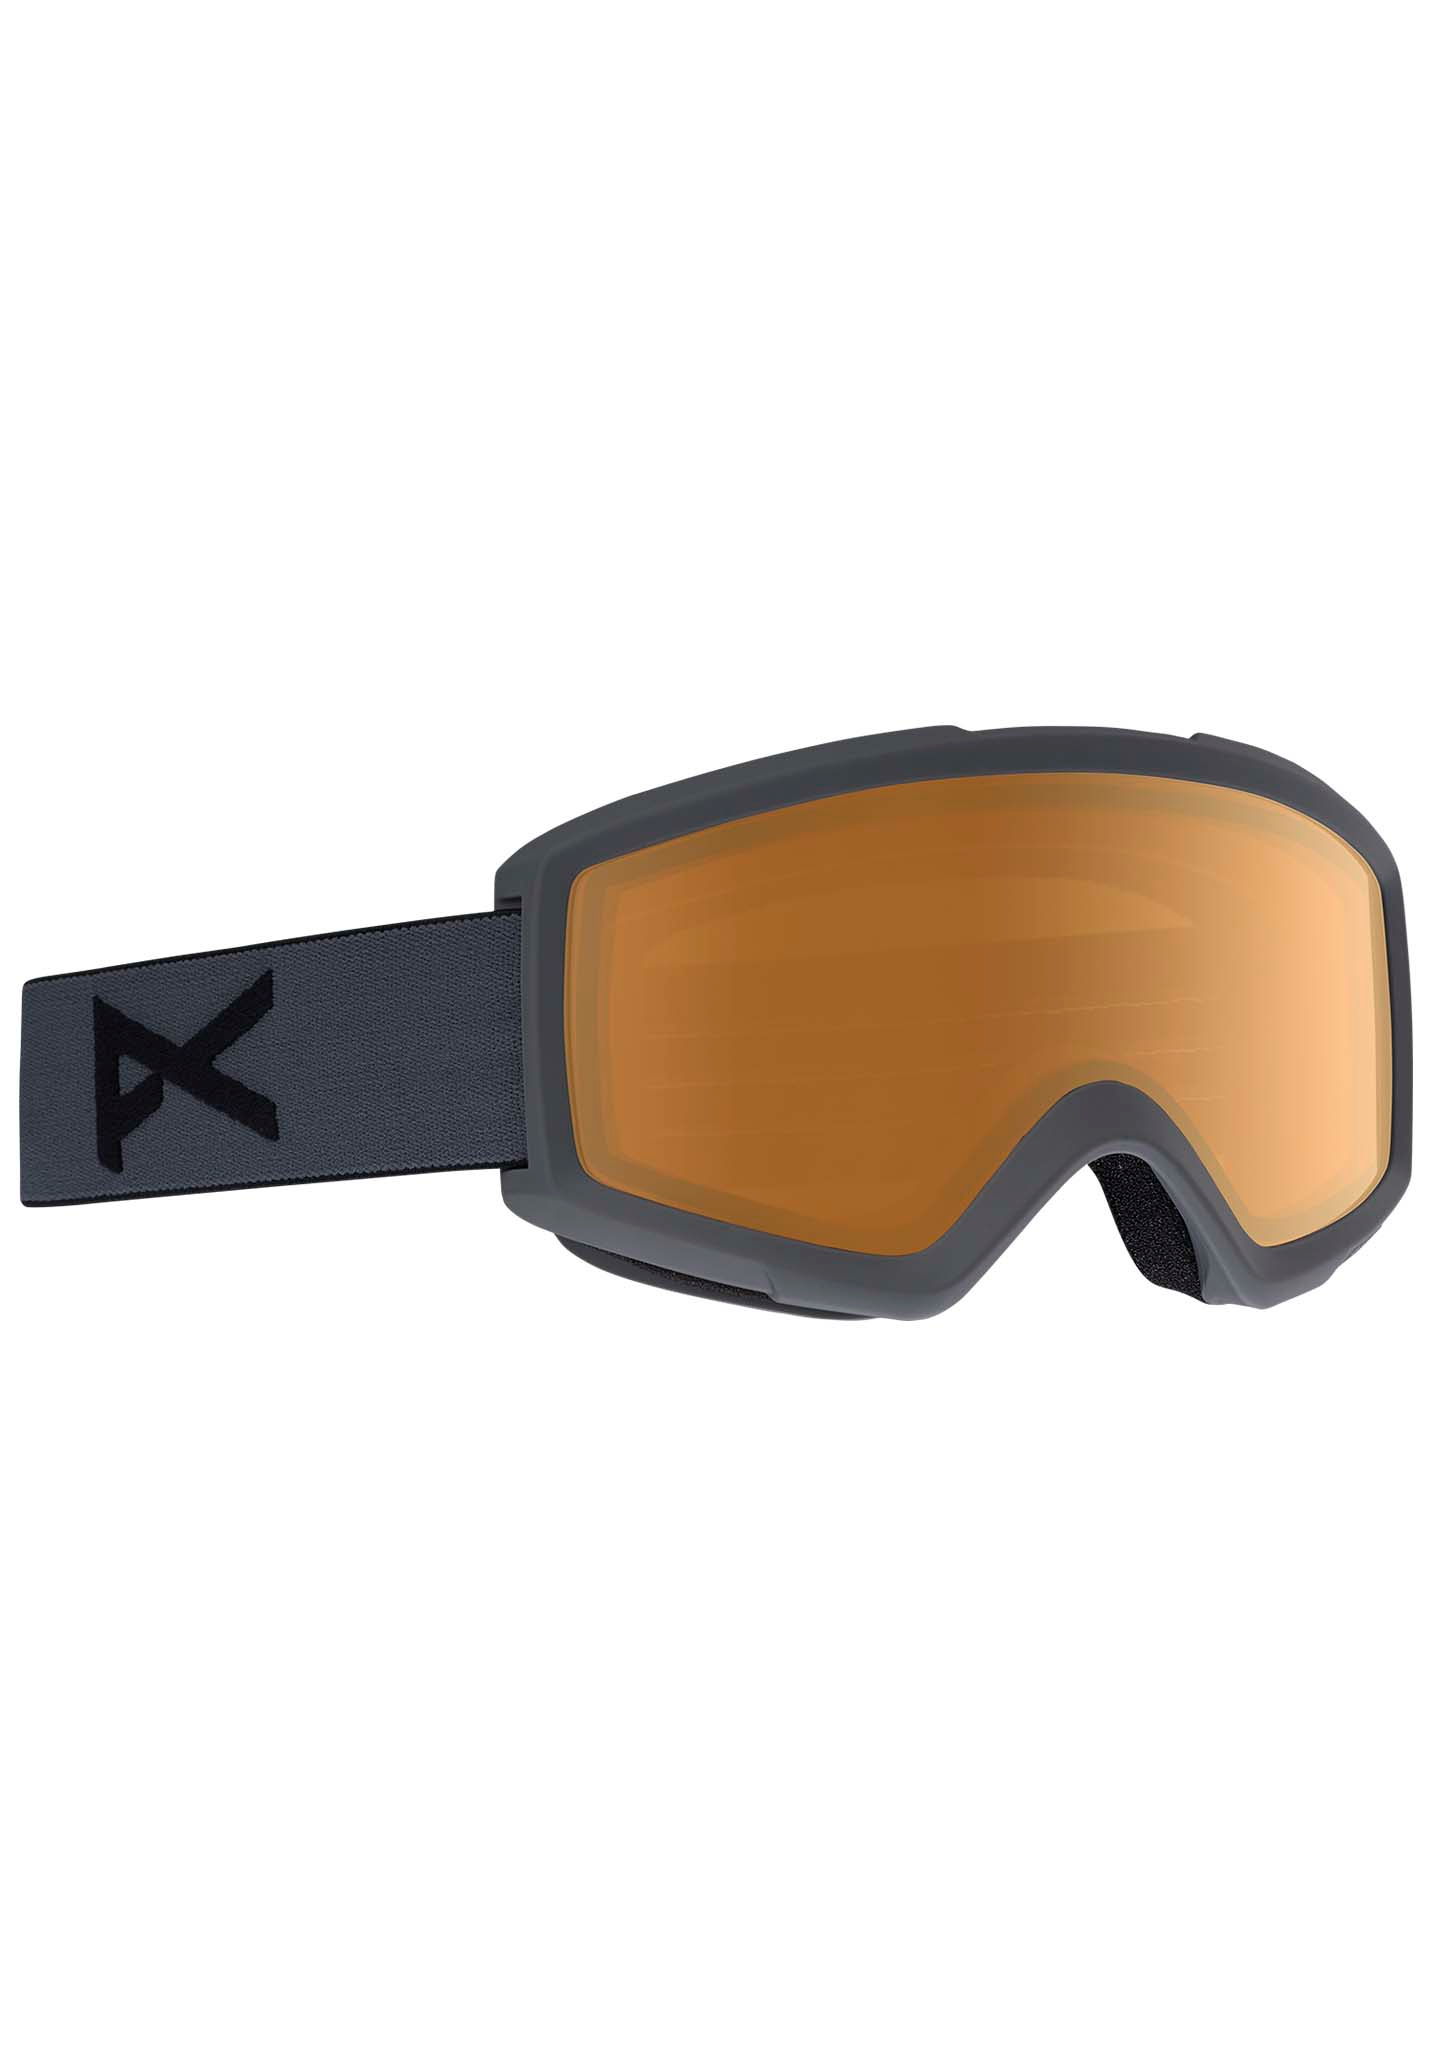 Anon Helix 2.0 Snowboardbrillen tarnung/amber One Size